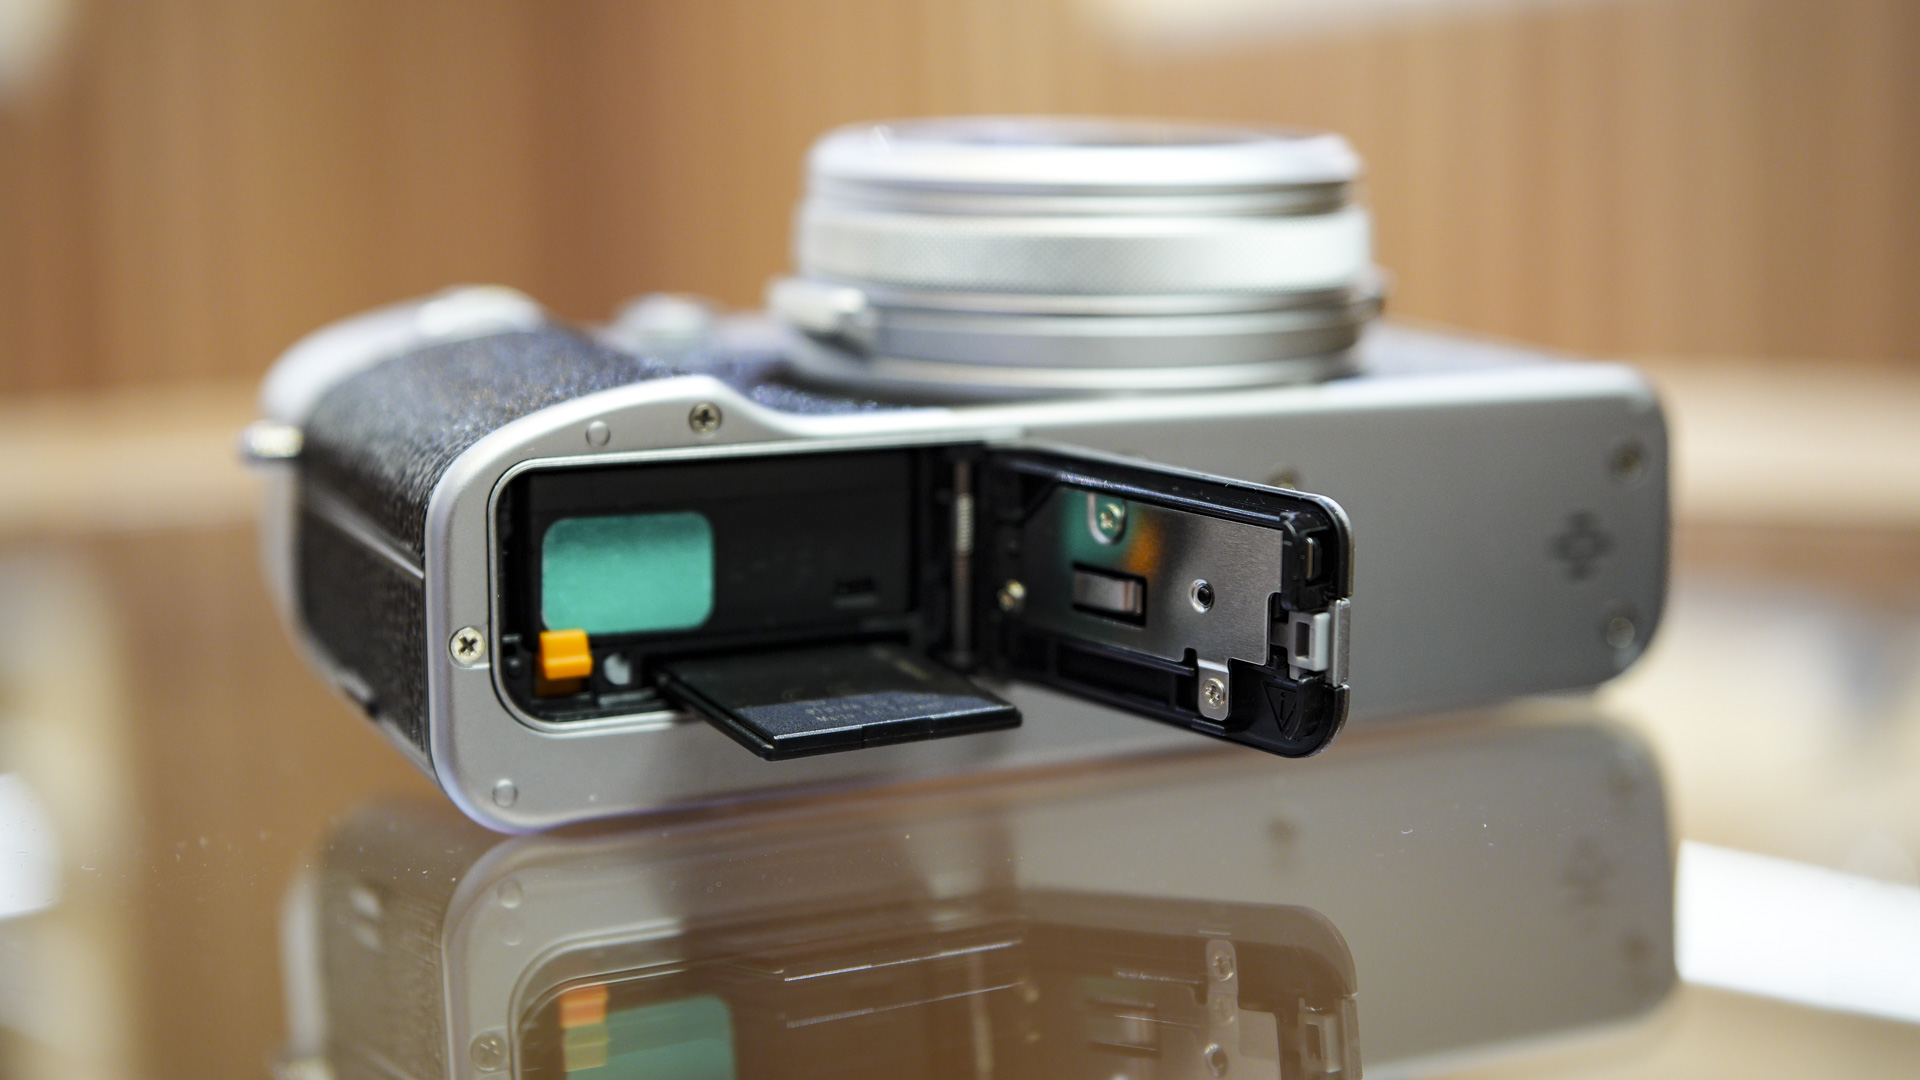 Memory card in place in the Fujifilm X100VI